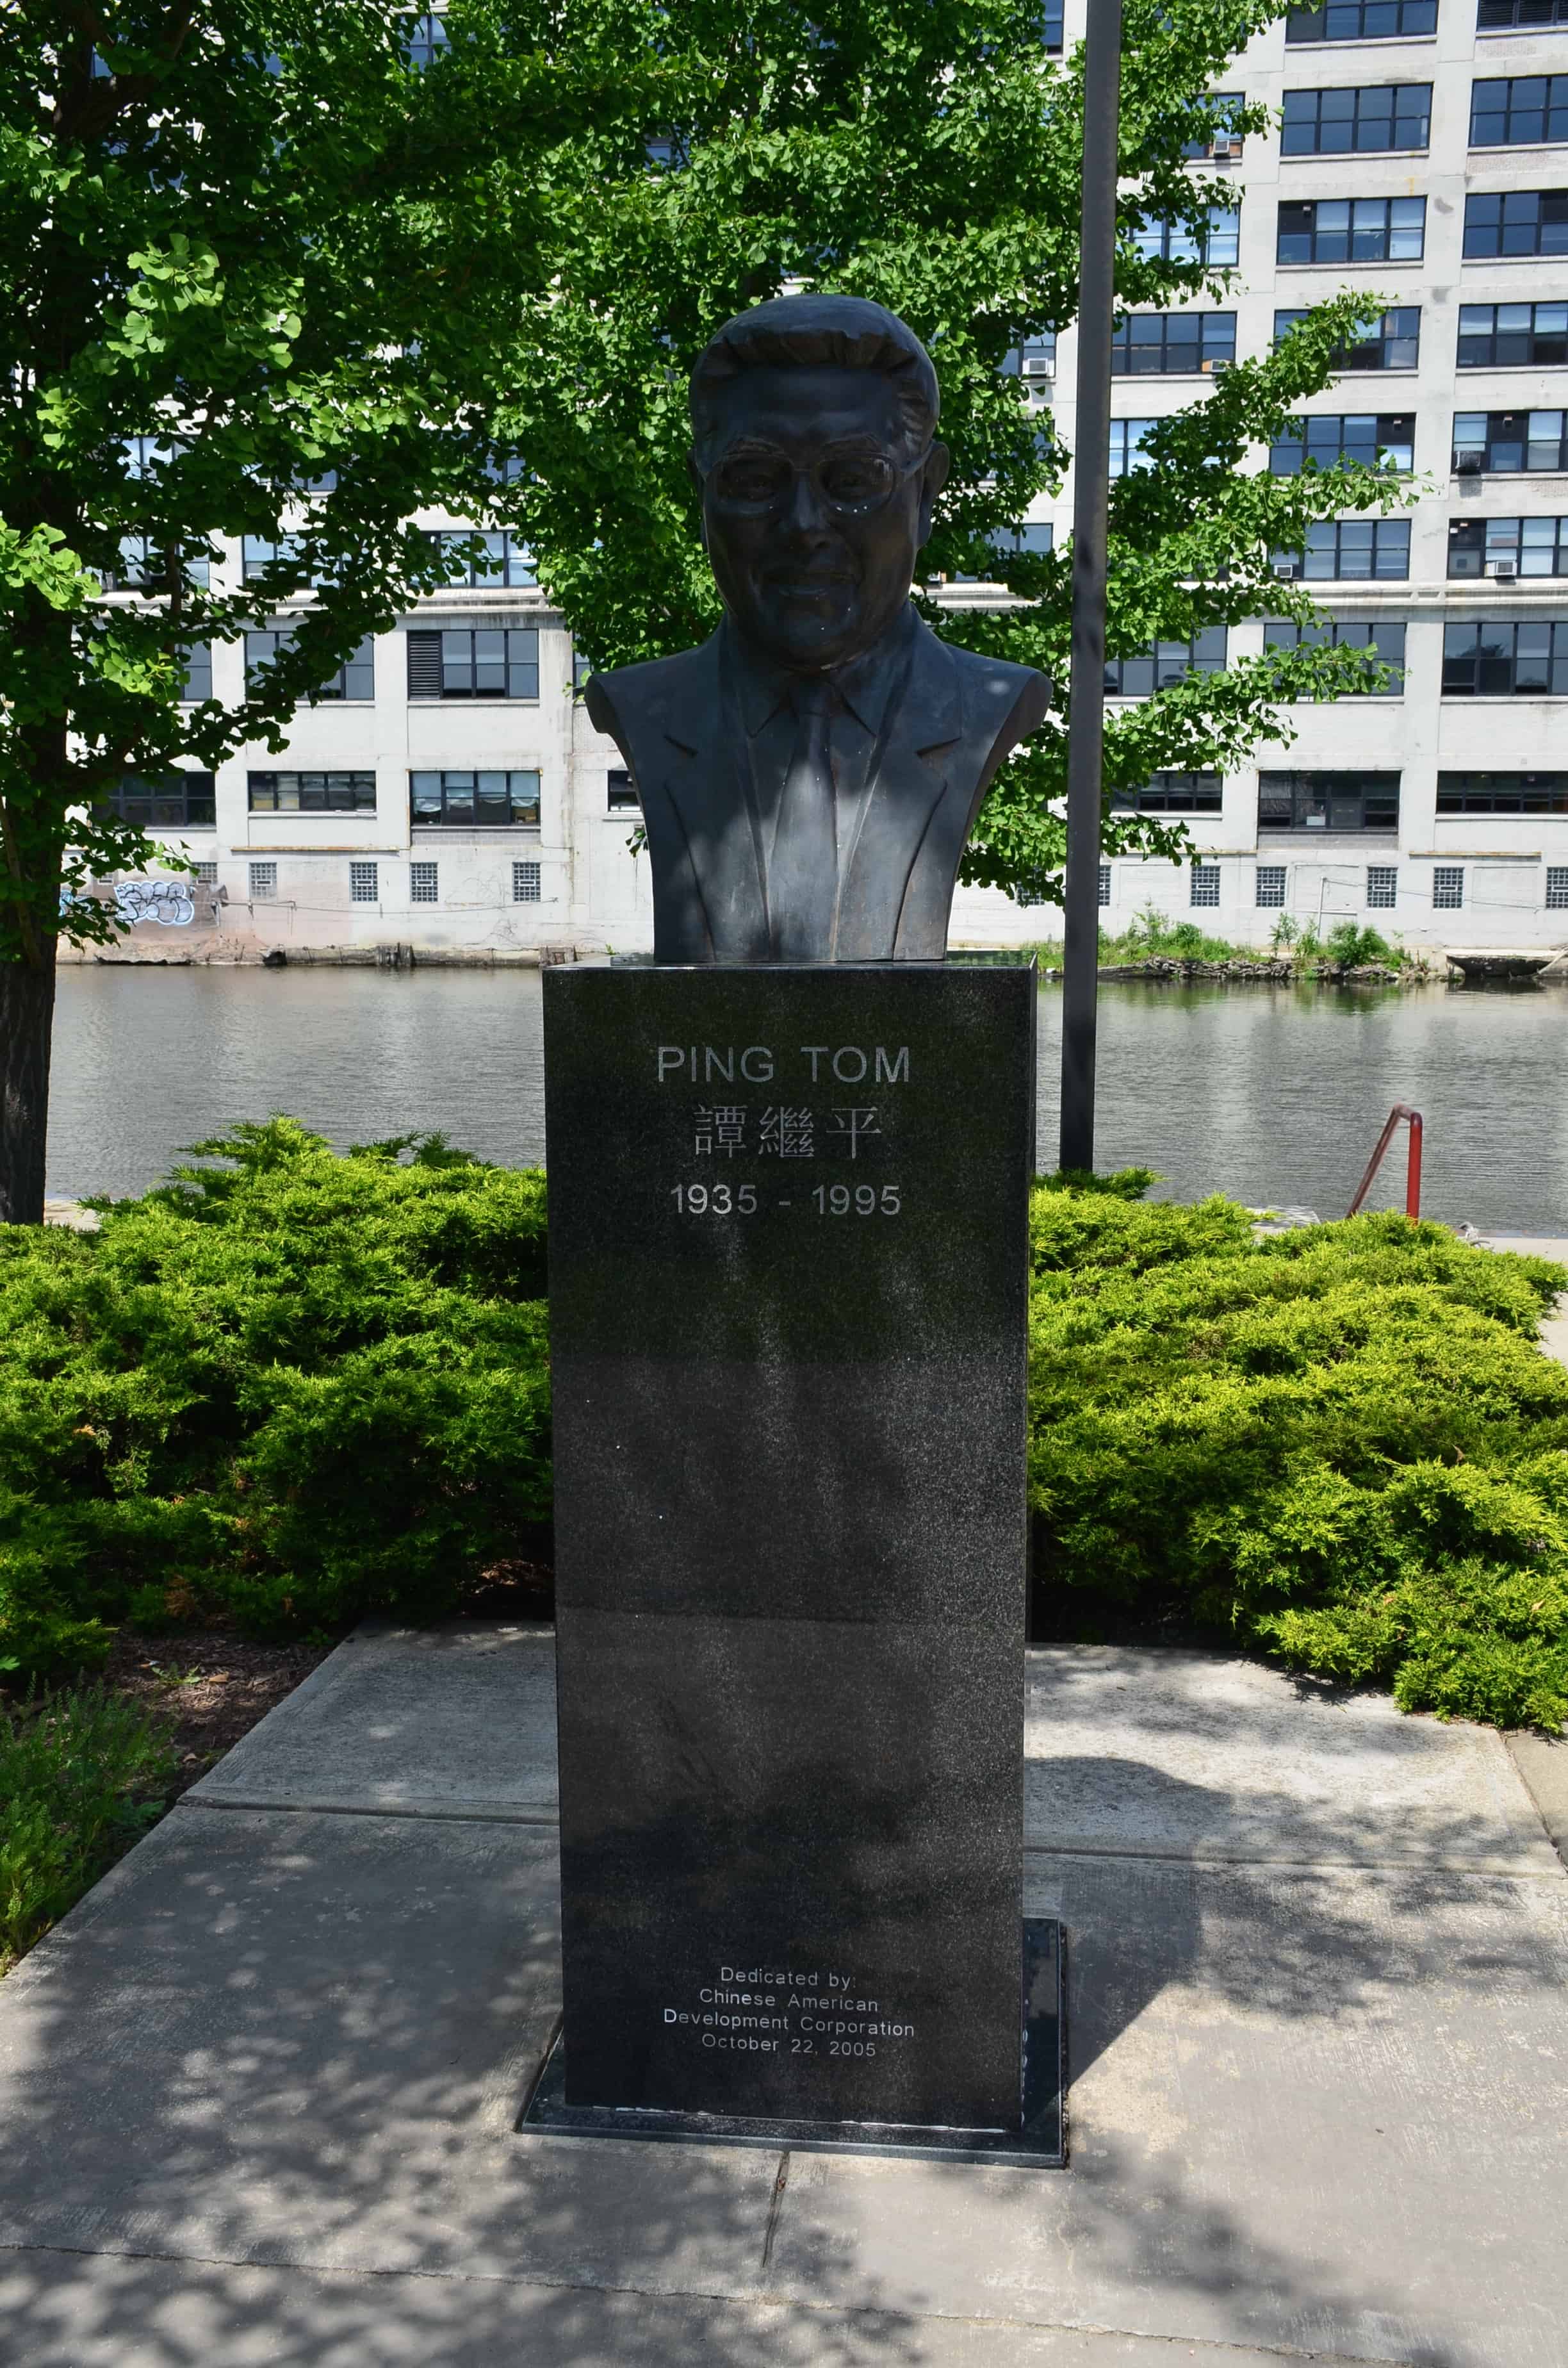 Bust of Ping Tom at Ping Tom Memorial Park